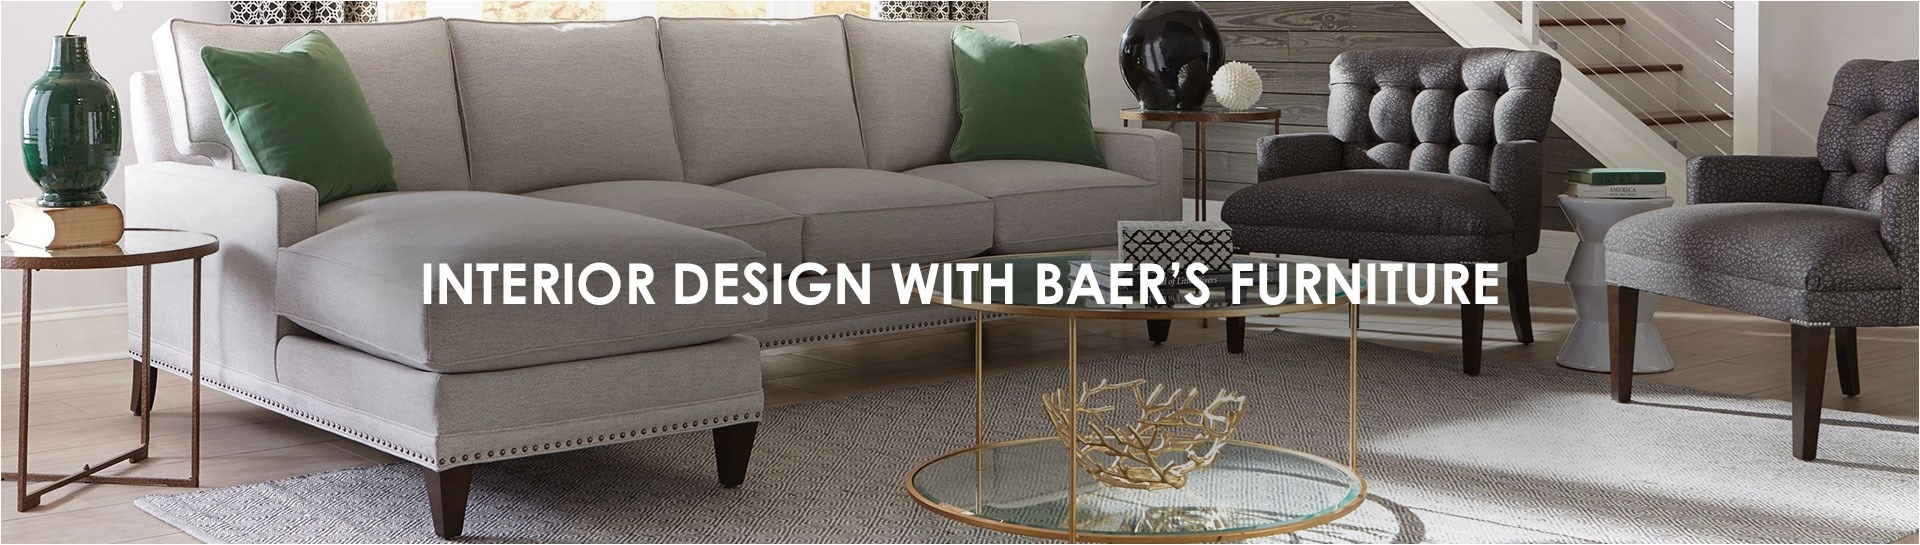 interior design with baers furniture